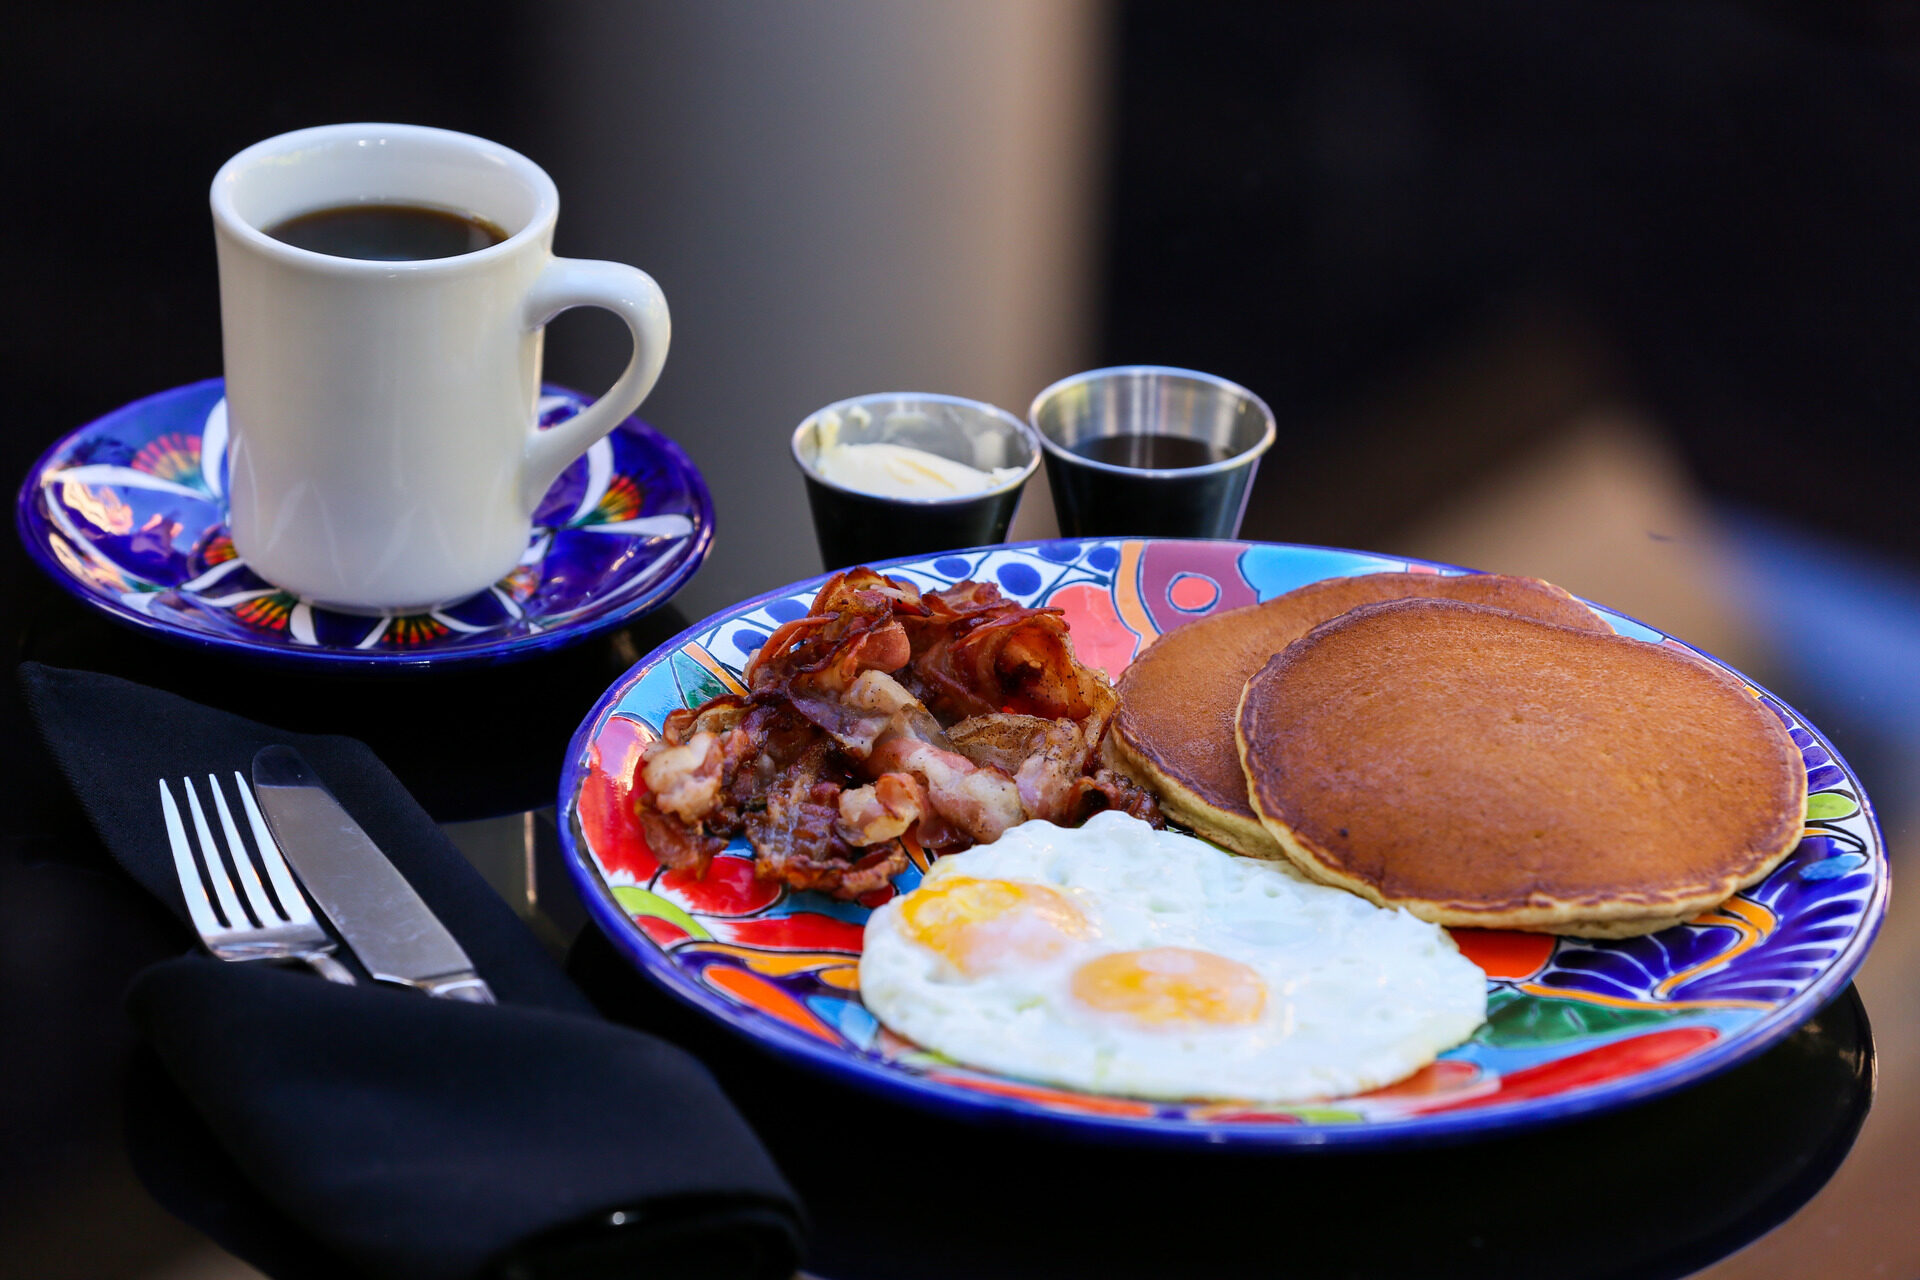 Breakfast combo at Silverback diner in Vista, California